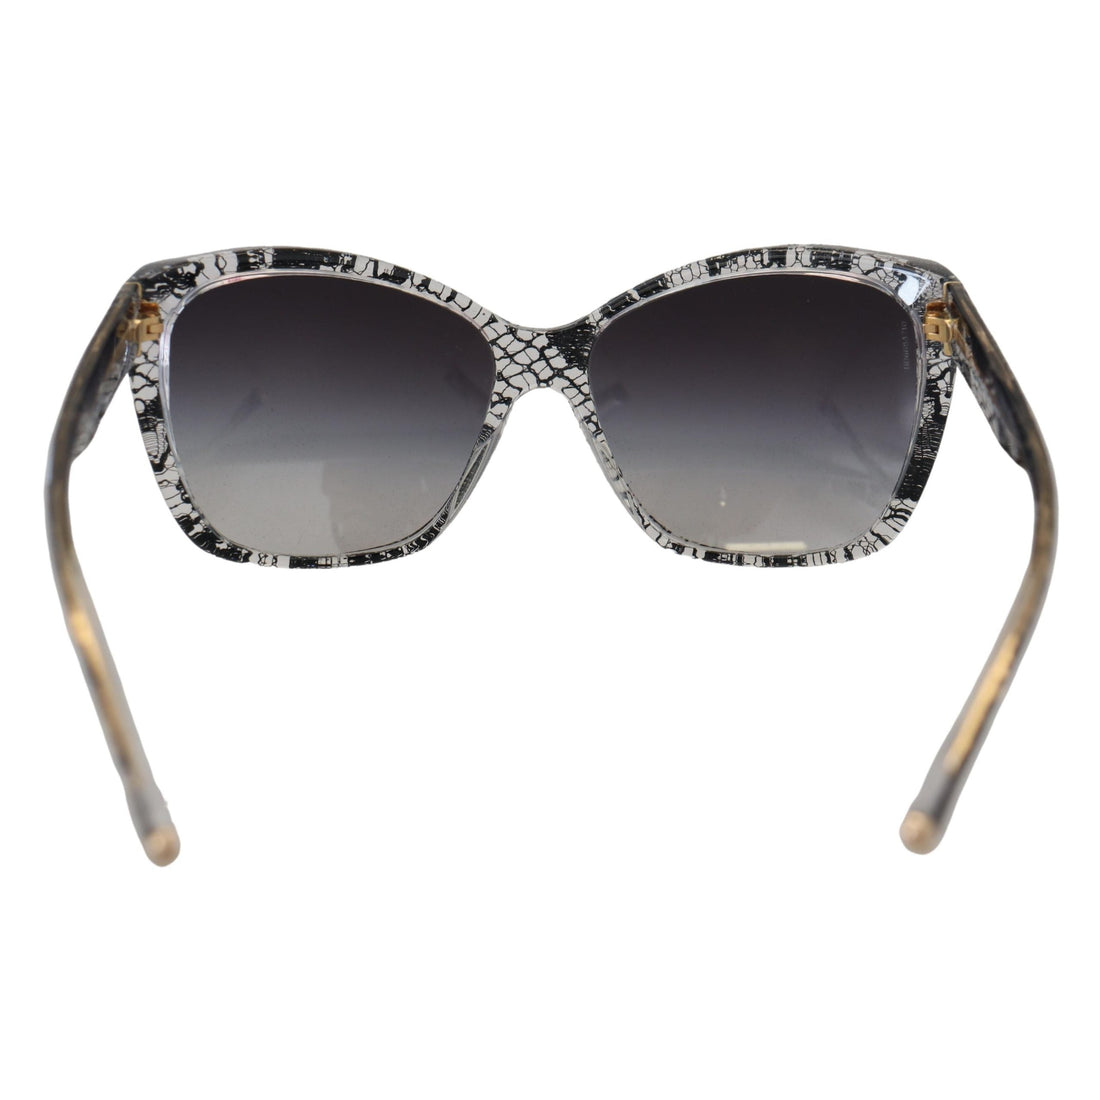 Dolce & Gabbana Chic White Lace Trimmed Sunglasses